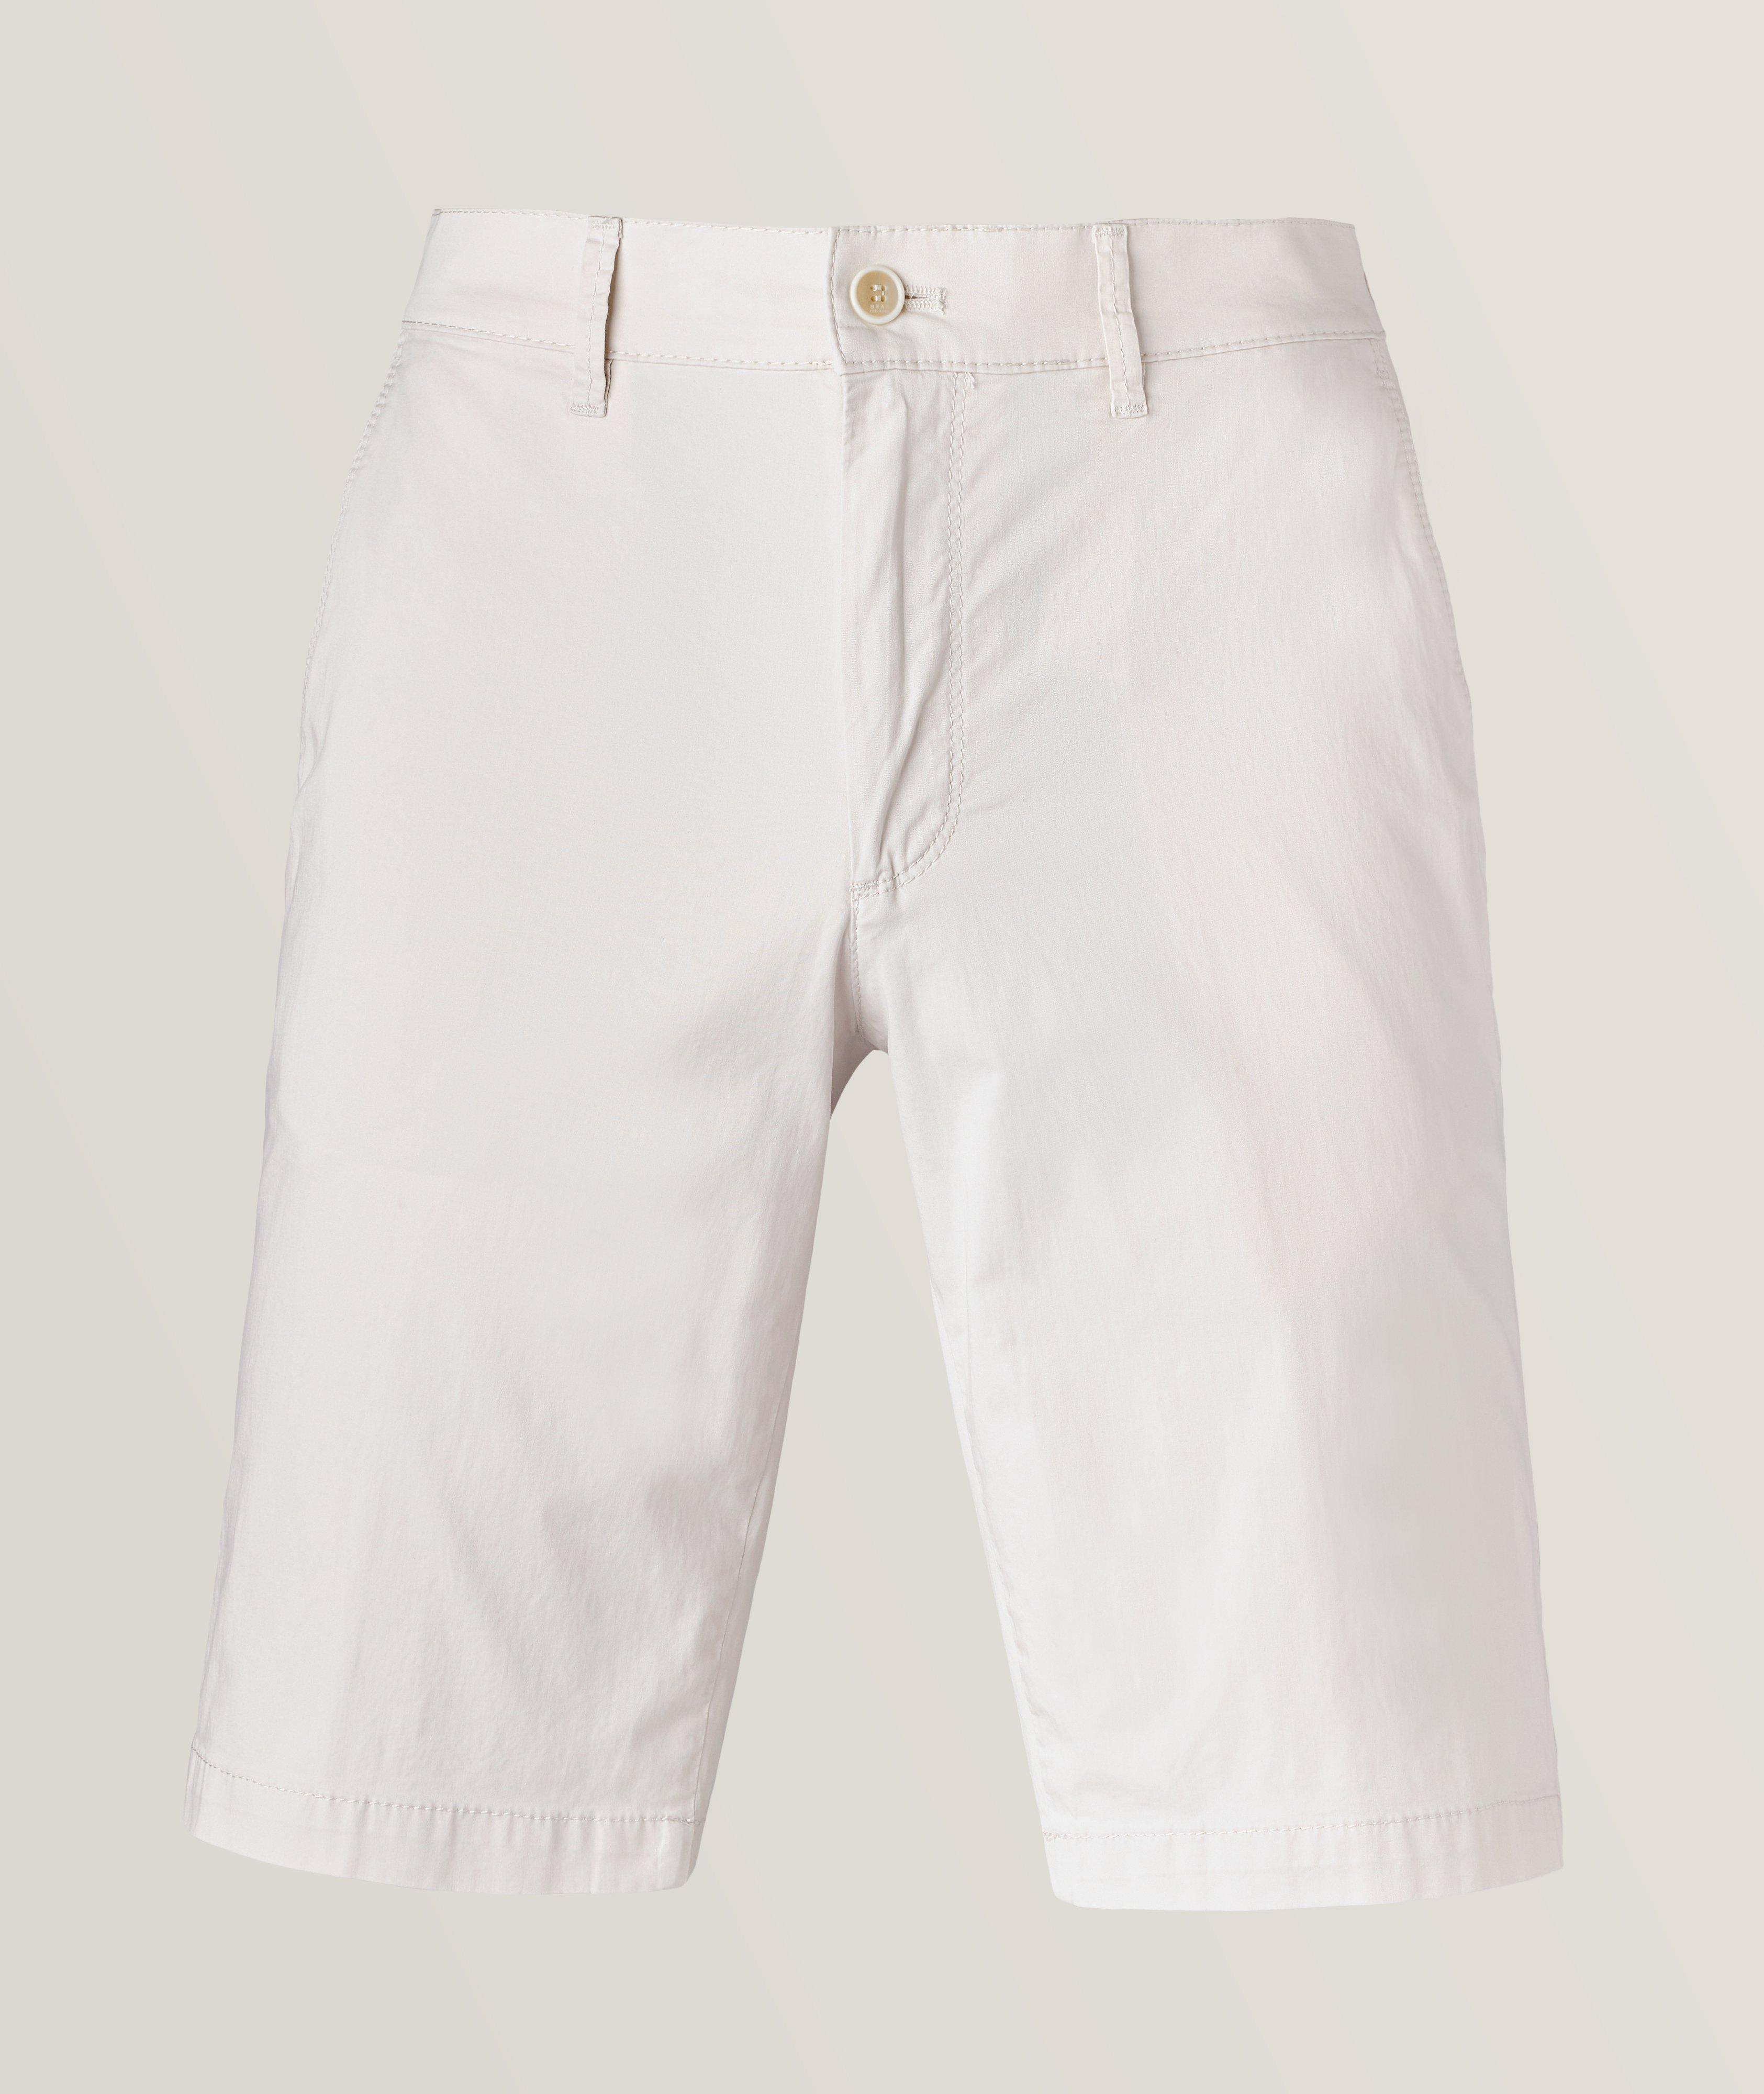 Bozen Ultralight Stretch-Cotton Shorts image 0